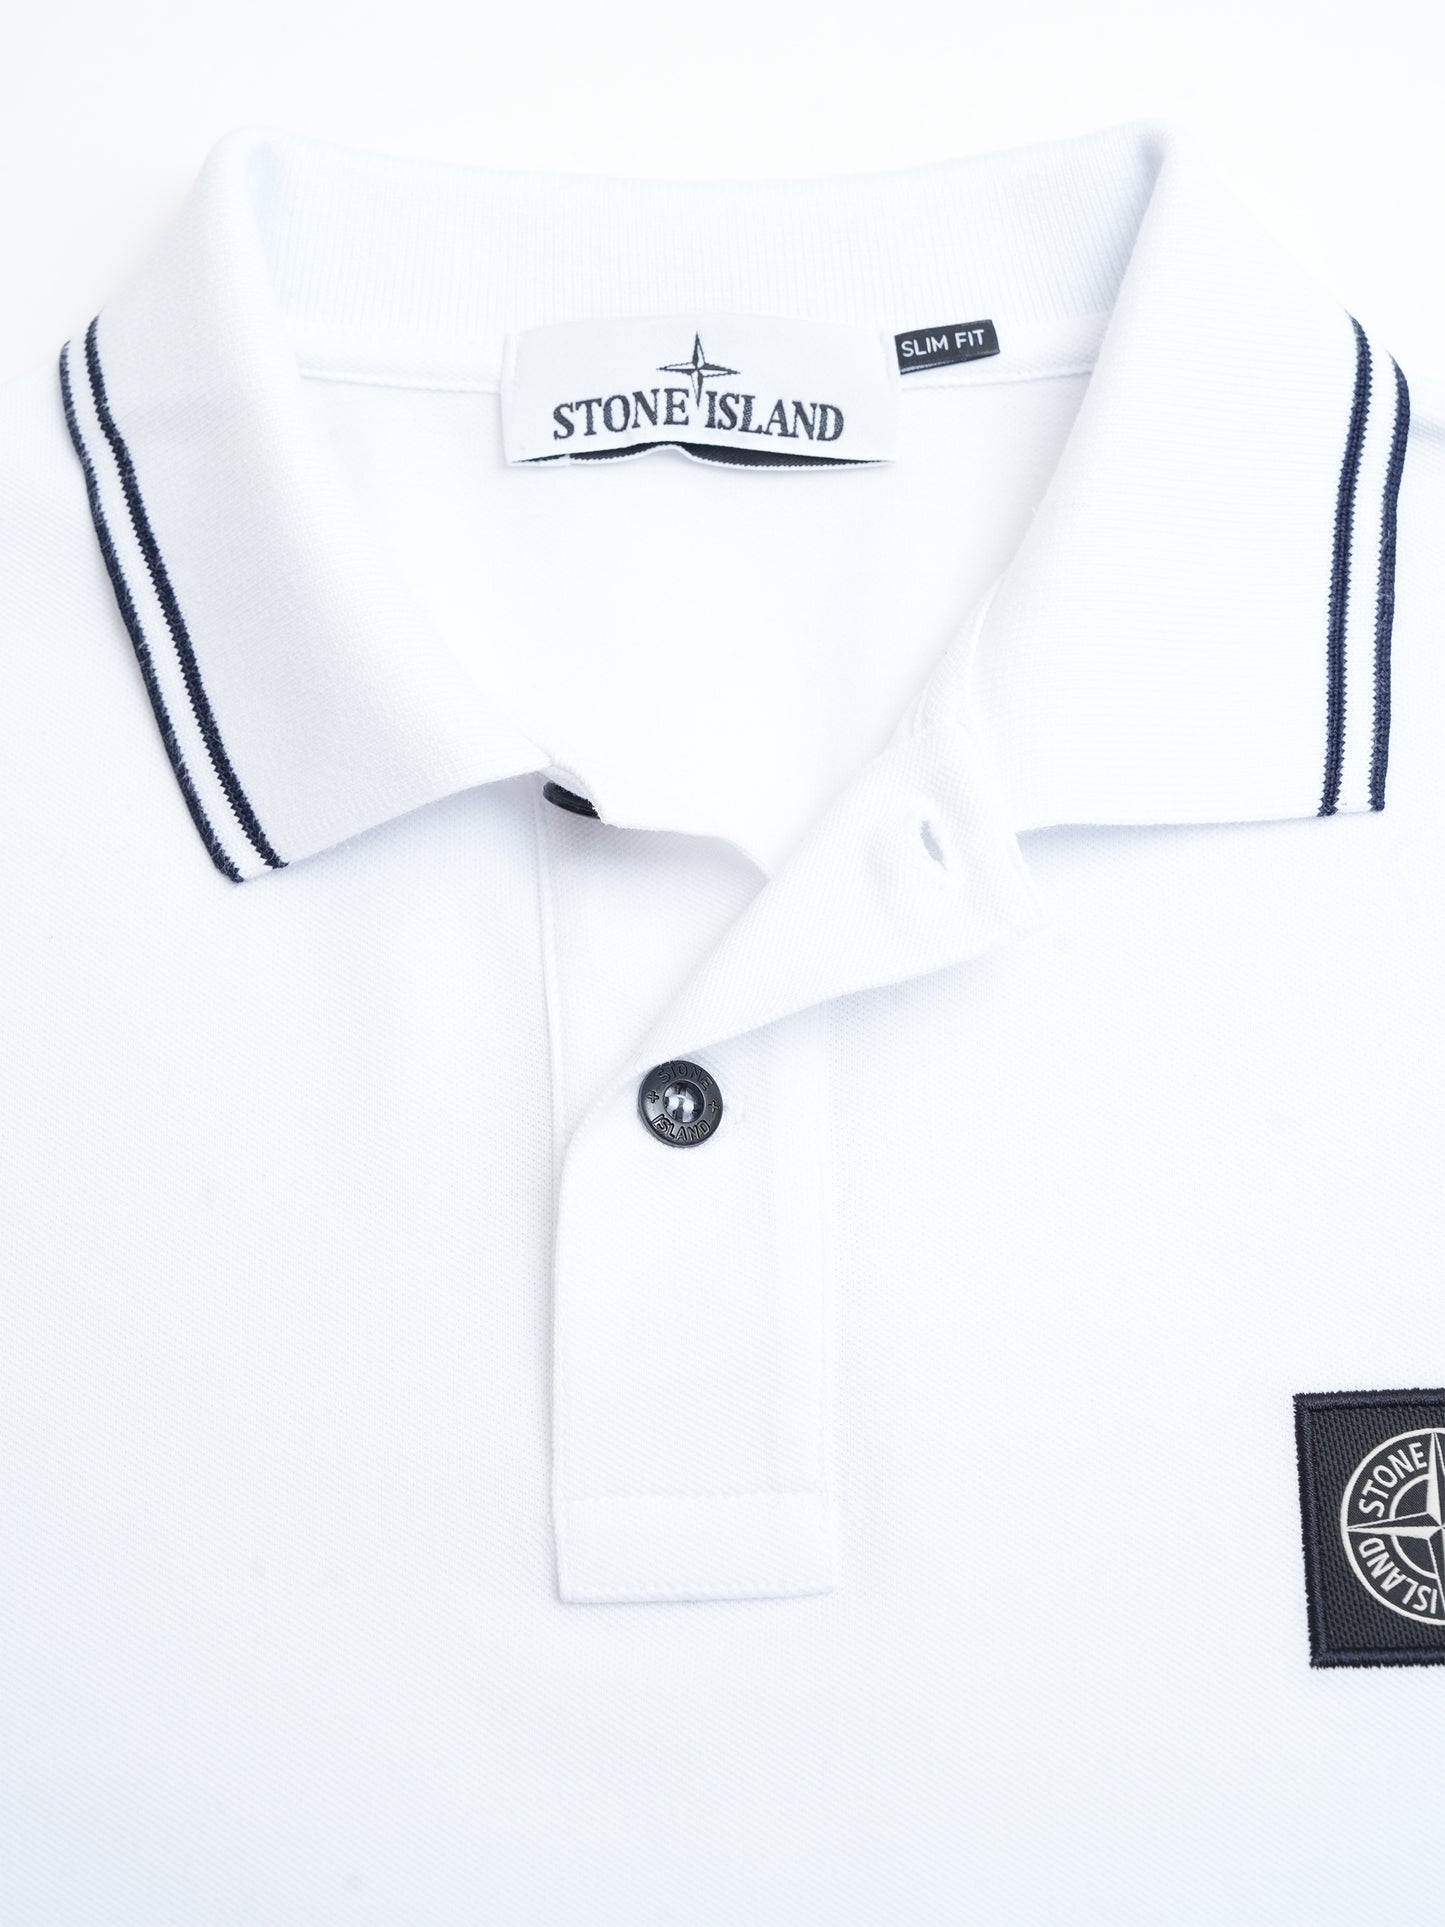 STONE ISLAND - Poloshirt mit Kompass-Patch Weiss – White